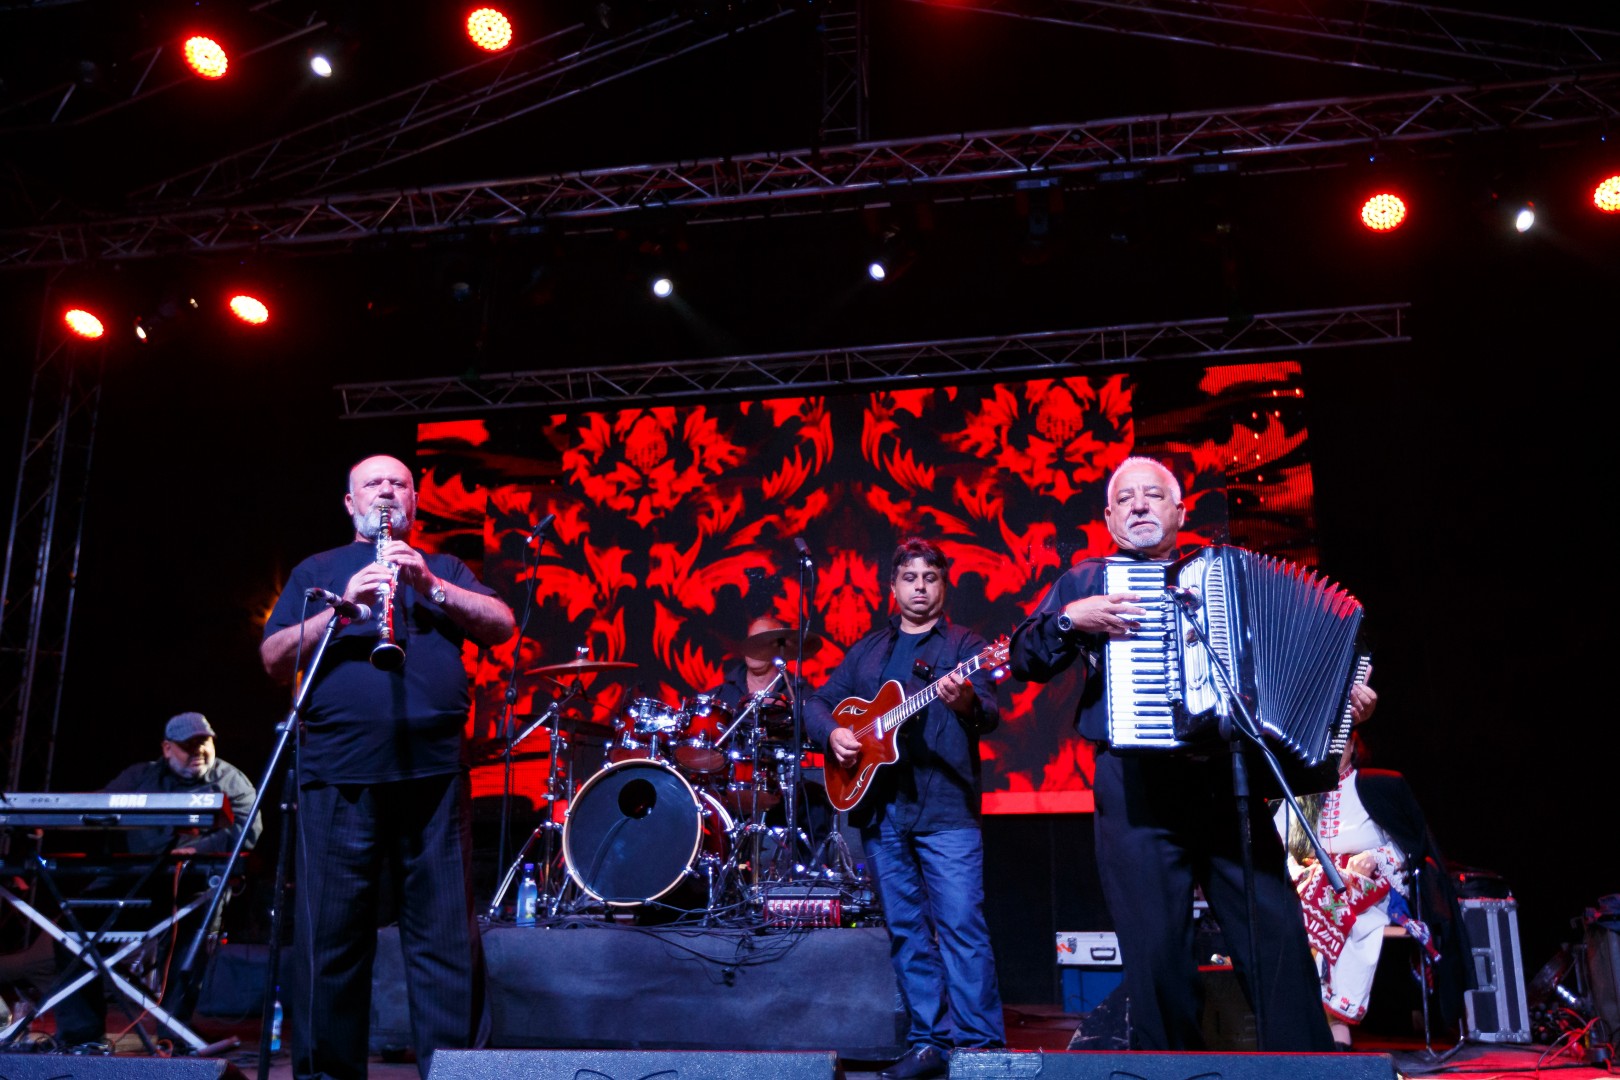 Ivo Papasov & His Wedding Band at Grădina Uranus in Bucharest on September 11, 2015 (9f73155ba5)